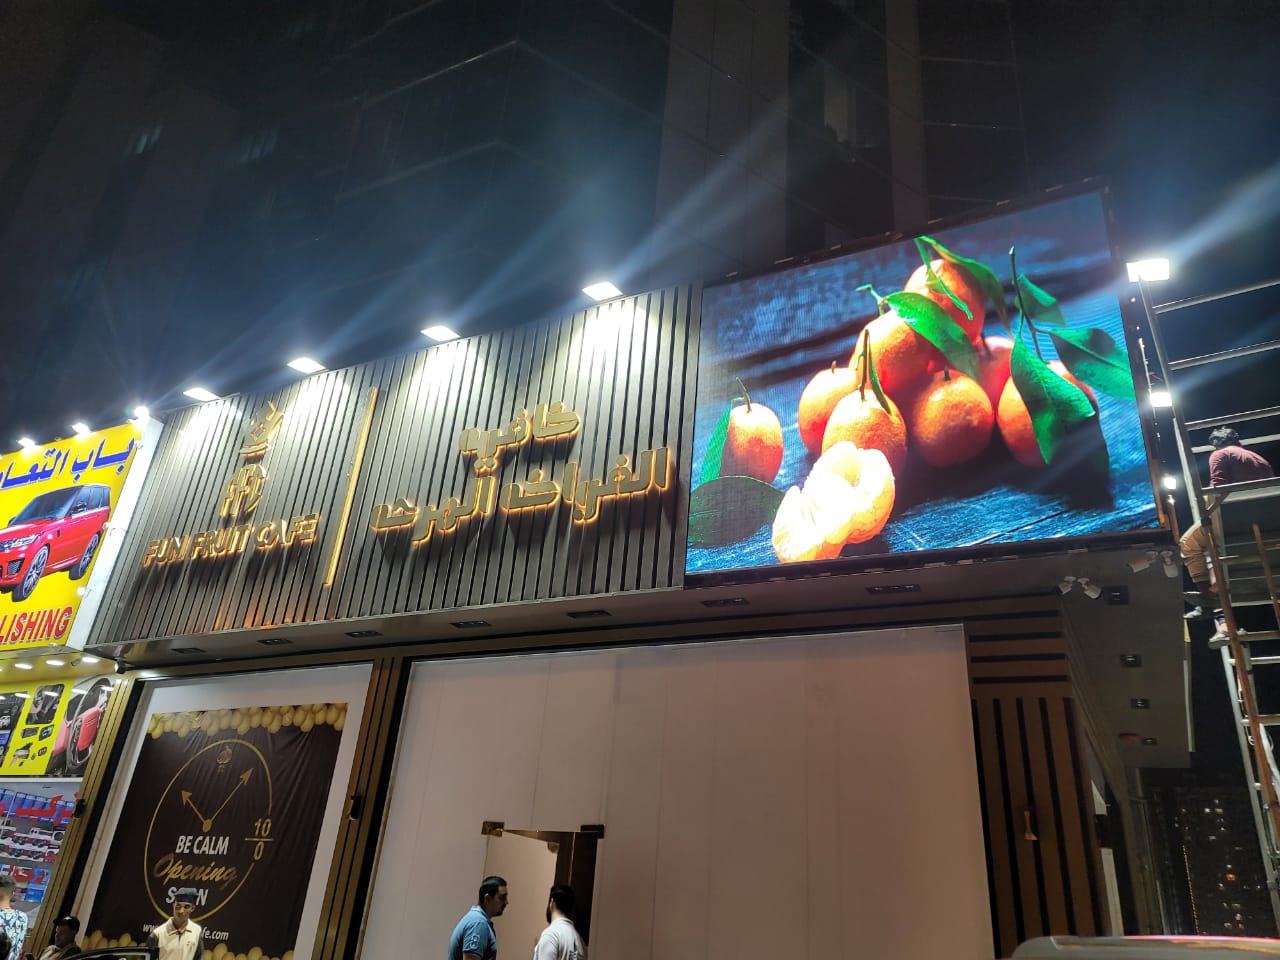 led_sign_board_in_uae<br />
advertising_led_screen<br />
Digital_signage_Dubai<br />
Digital_screen_Dubai